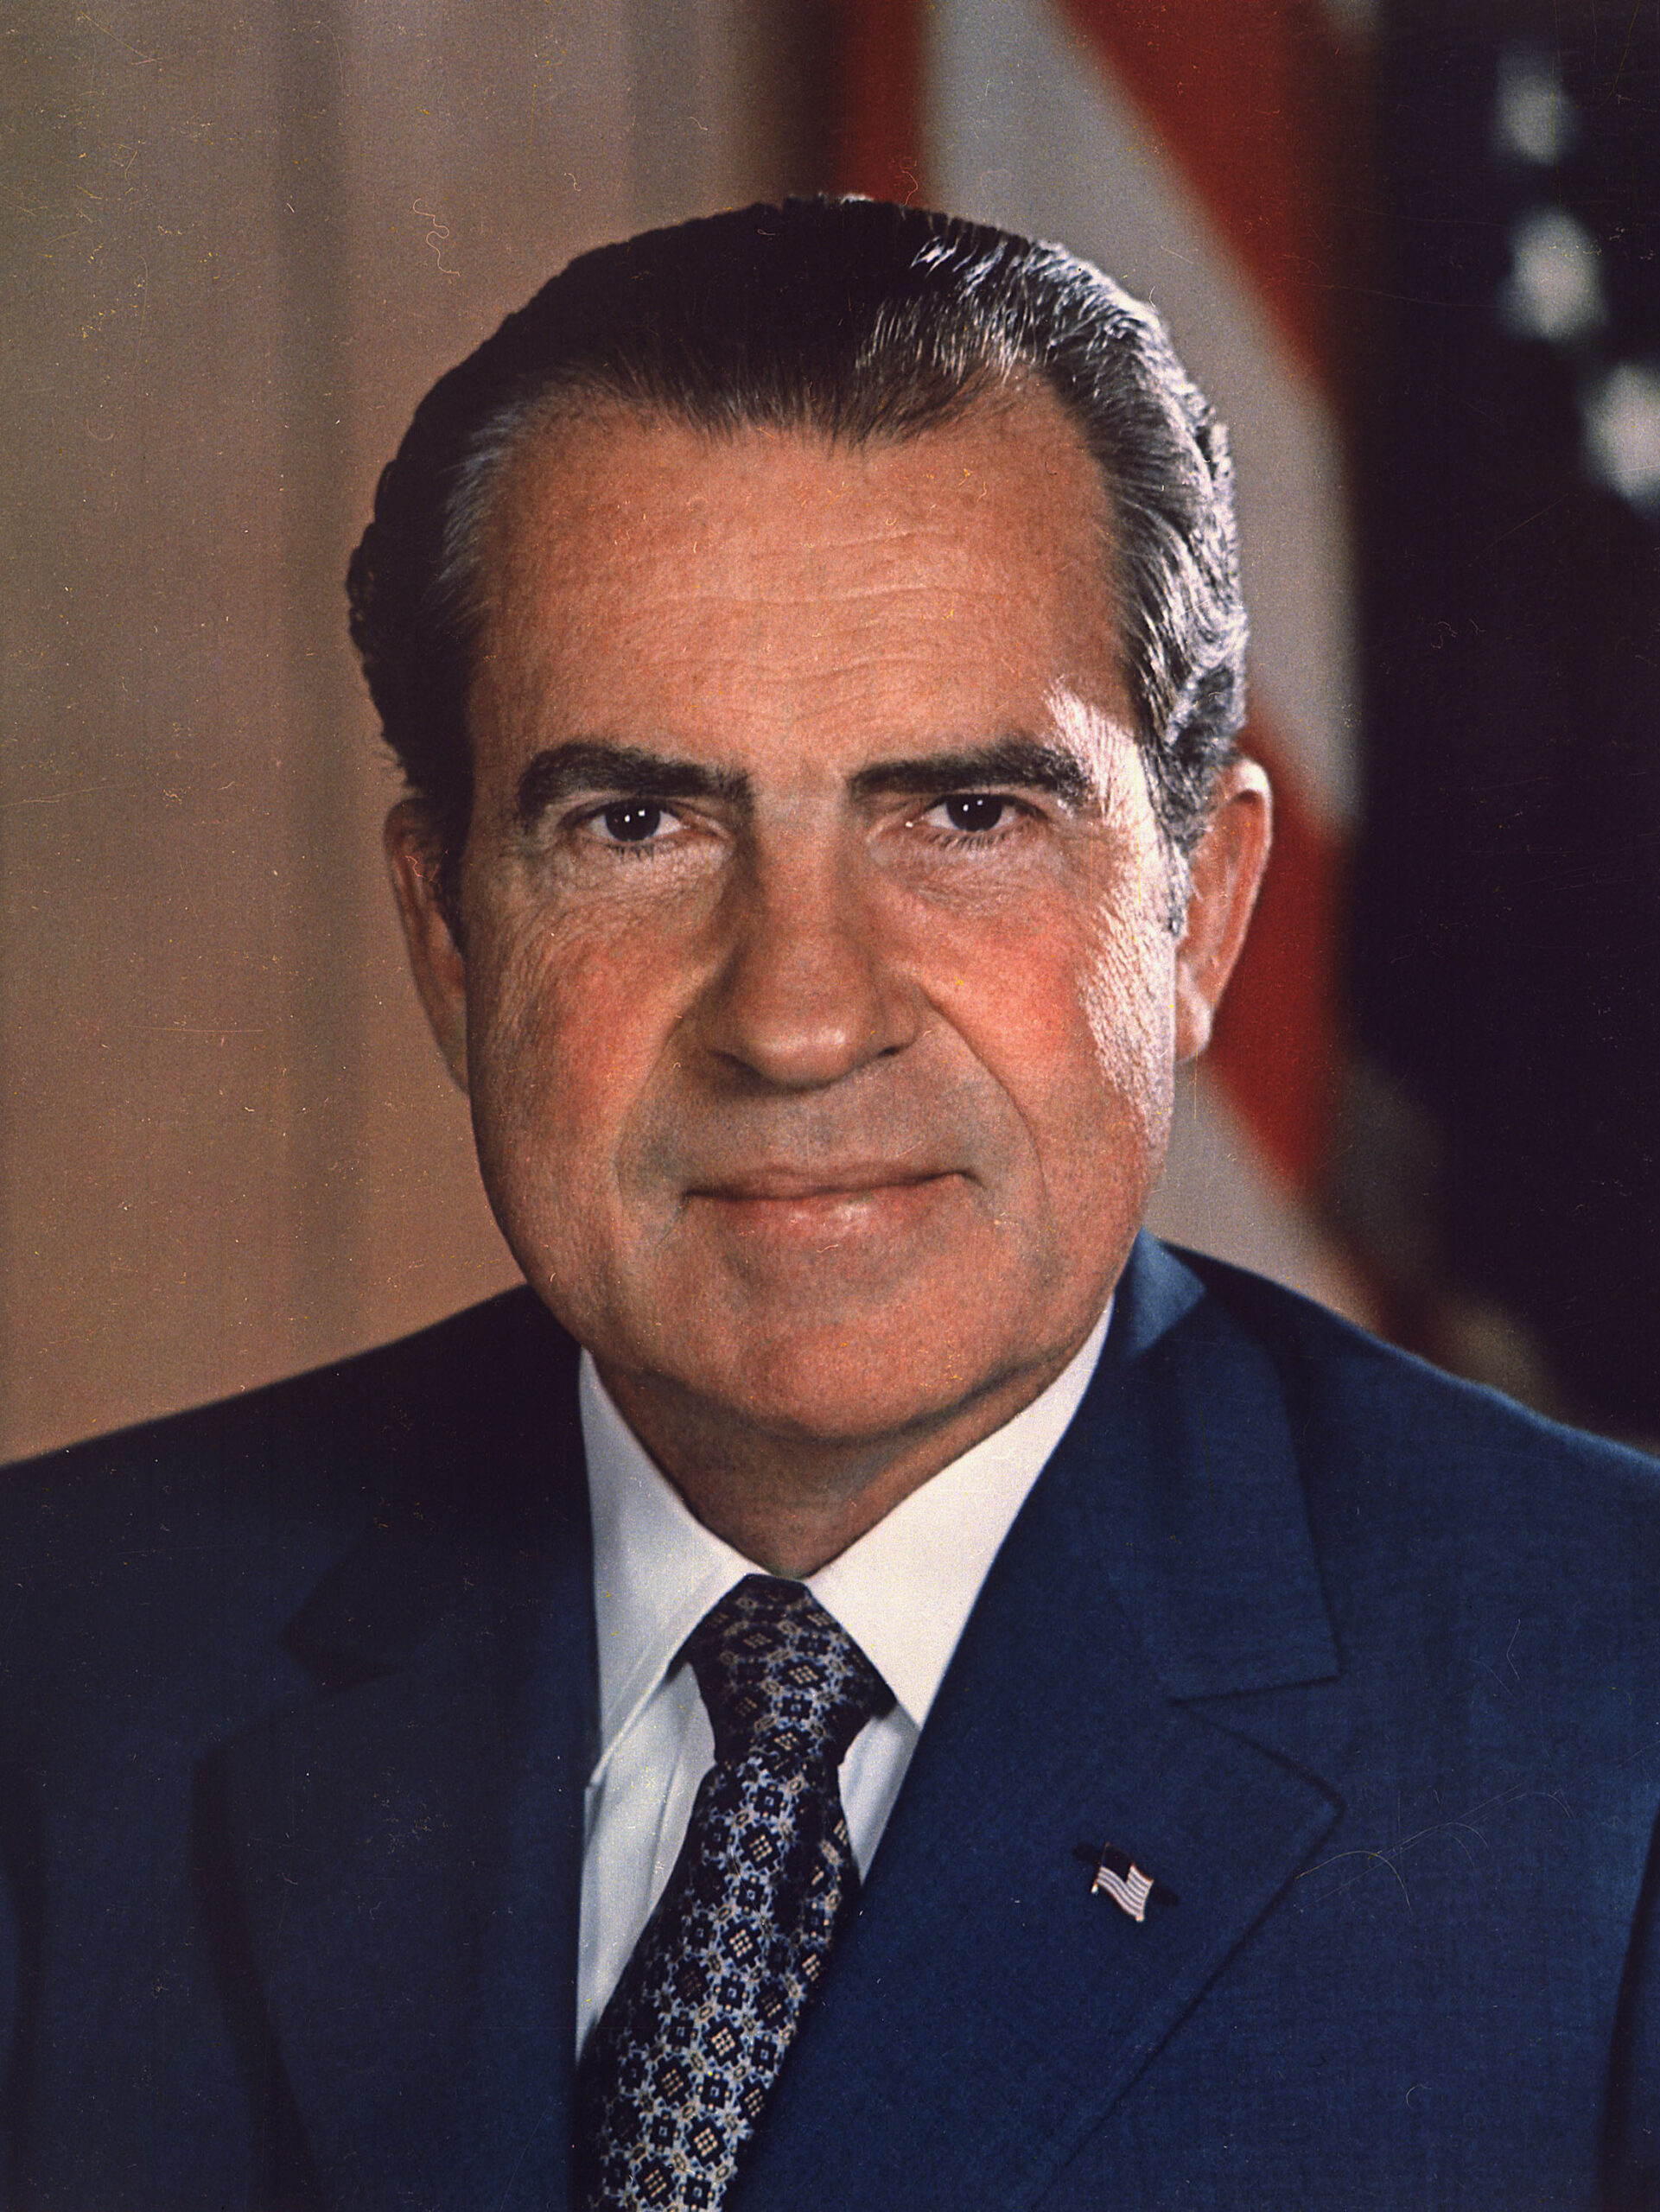 Richard-Nixon-presidential-portrait-(1)